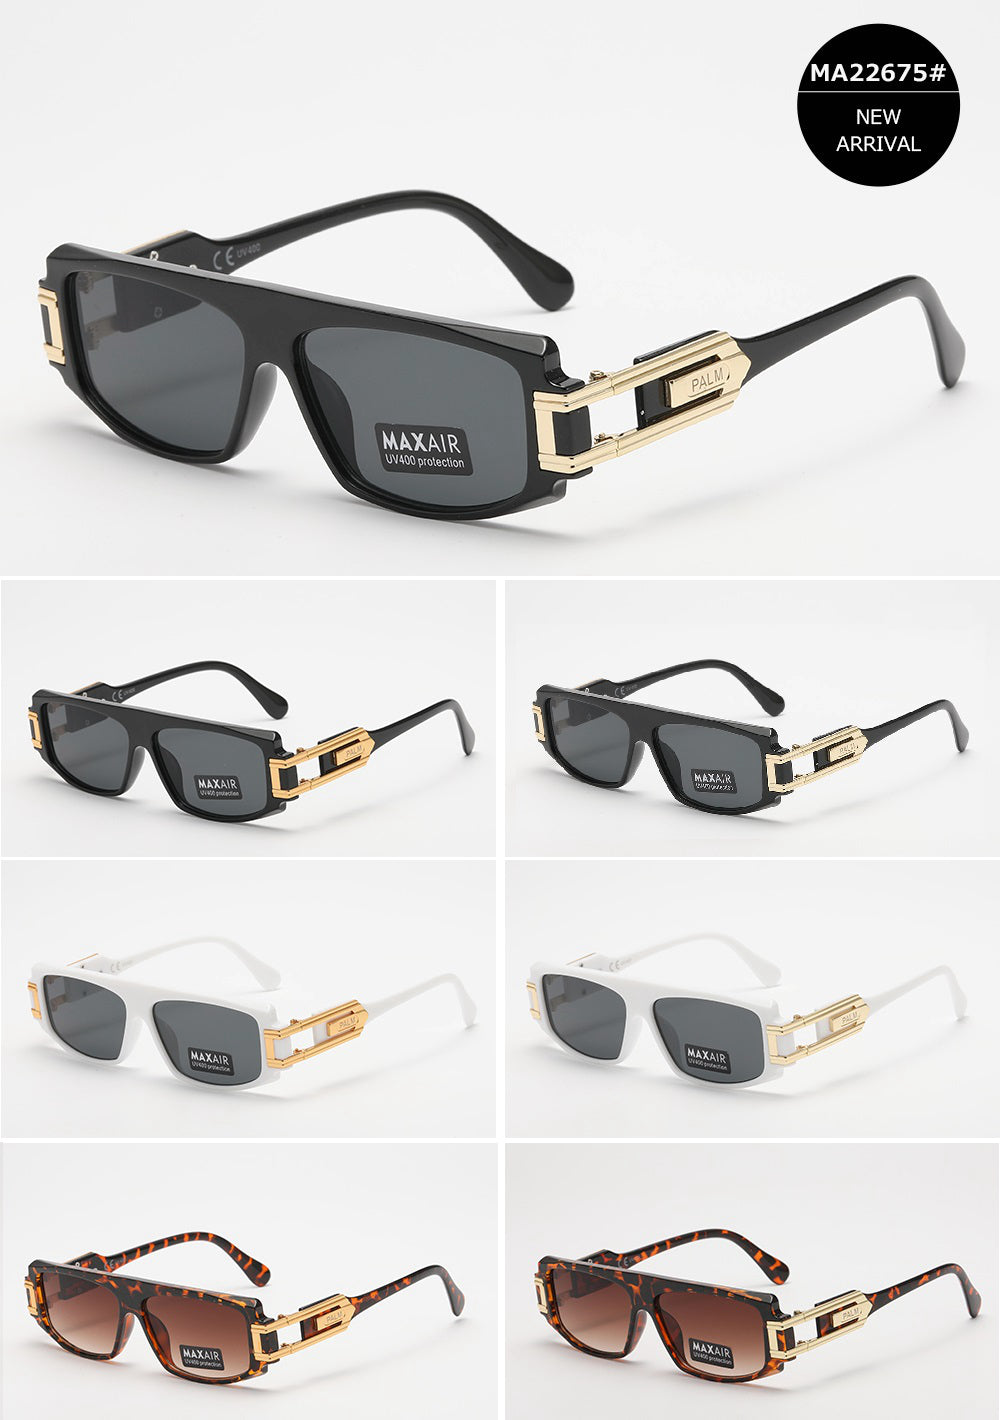 Maxair 22675 Sunglasses